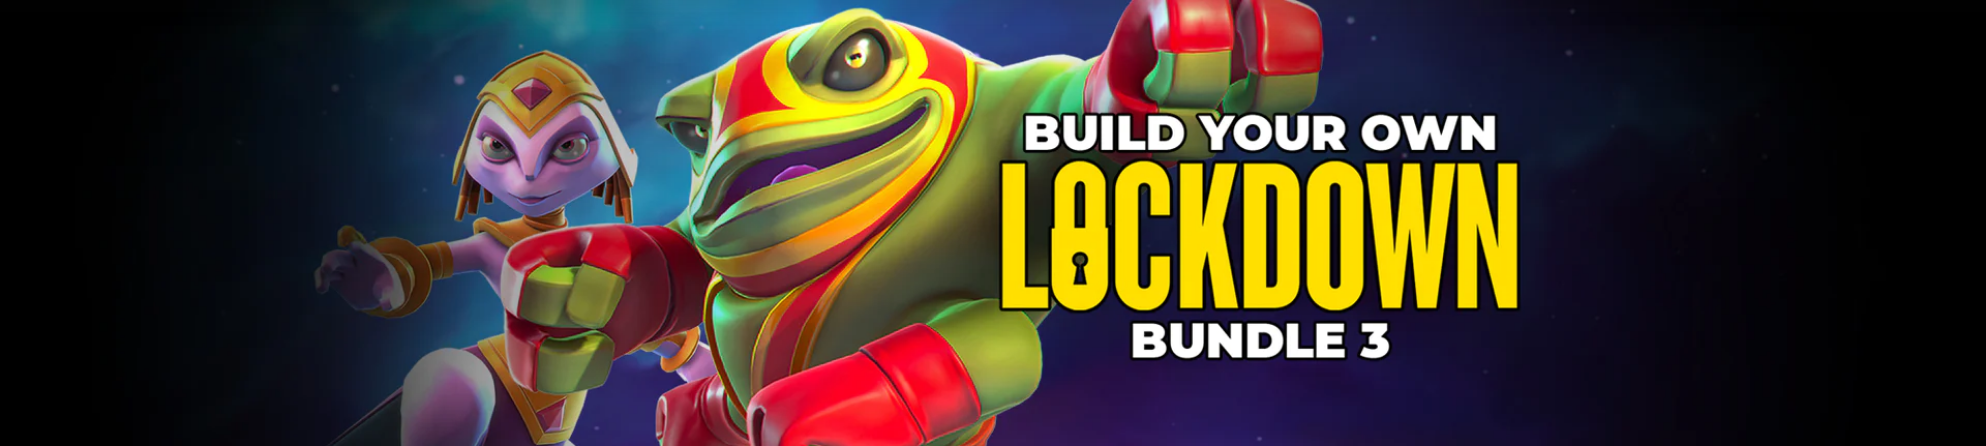 Screenshot_2020-08-15 Fanatical Build your own Lockdown Bundle 3.png